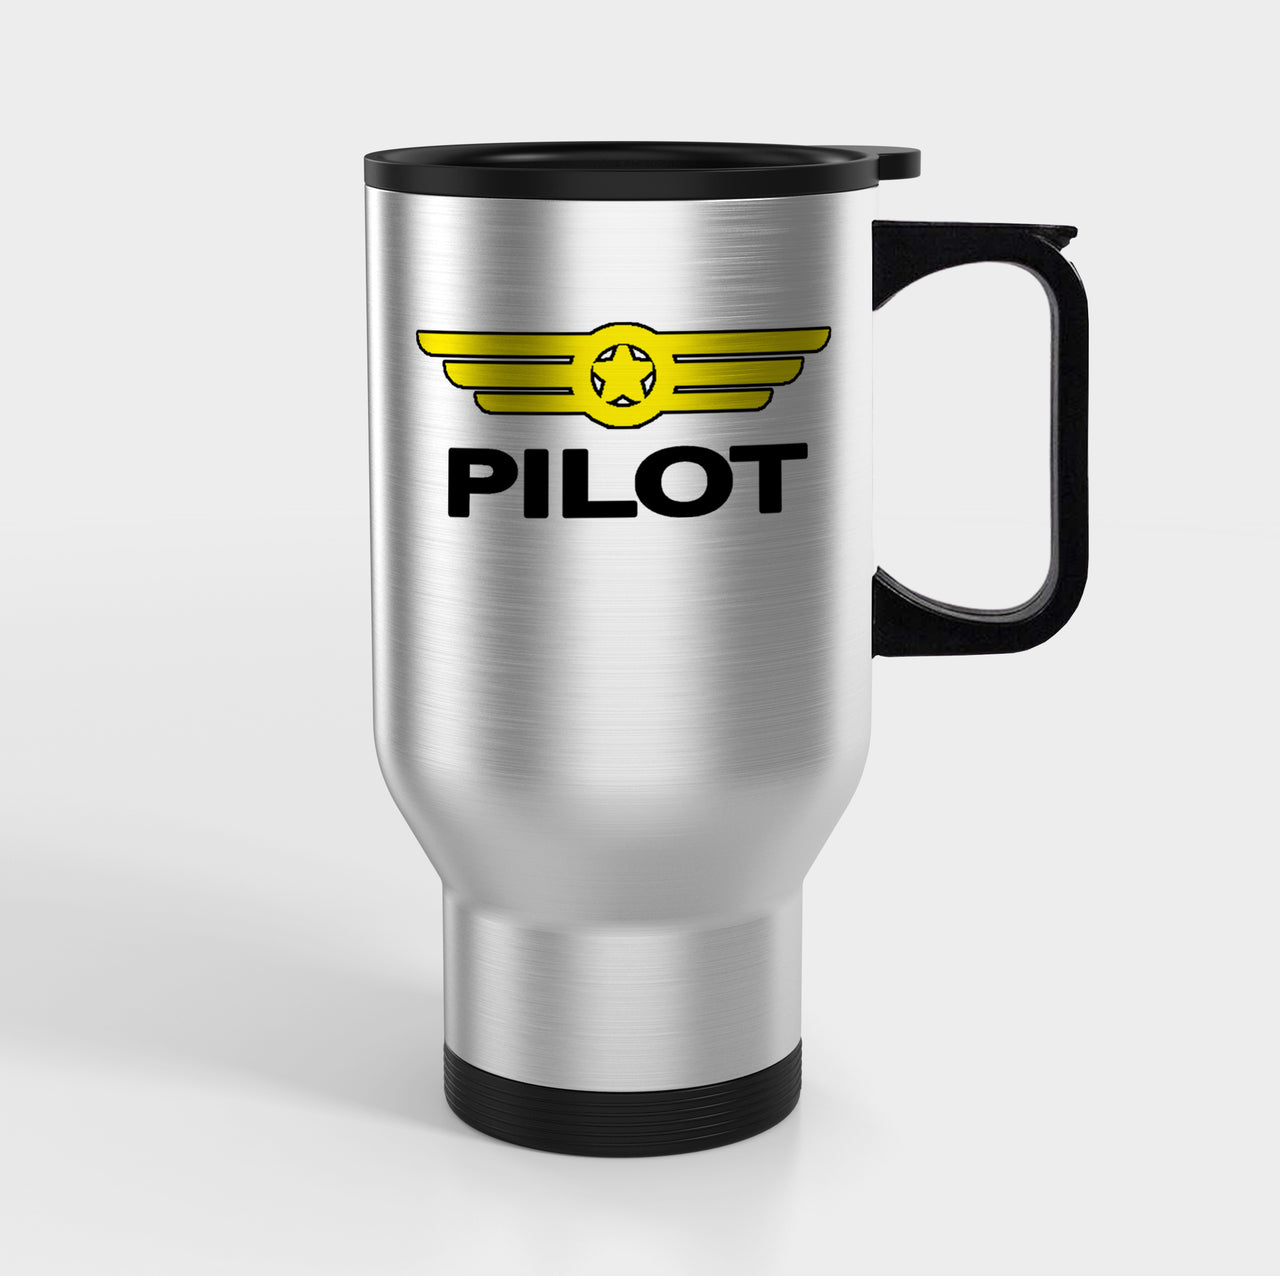 Pilot & Badge Designed Travel Mugs (With Holder)